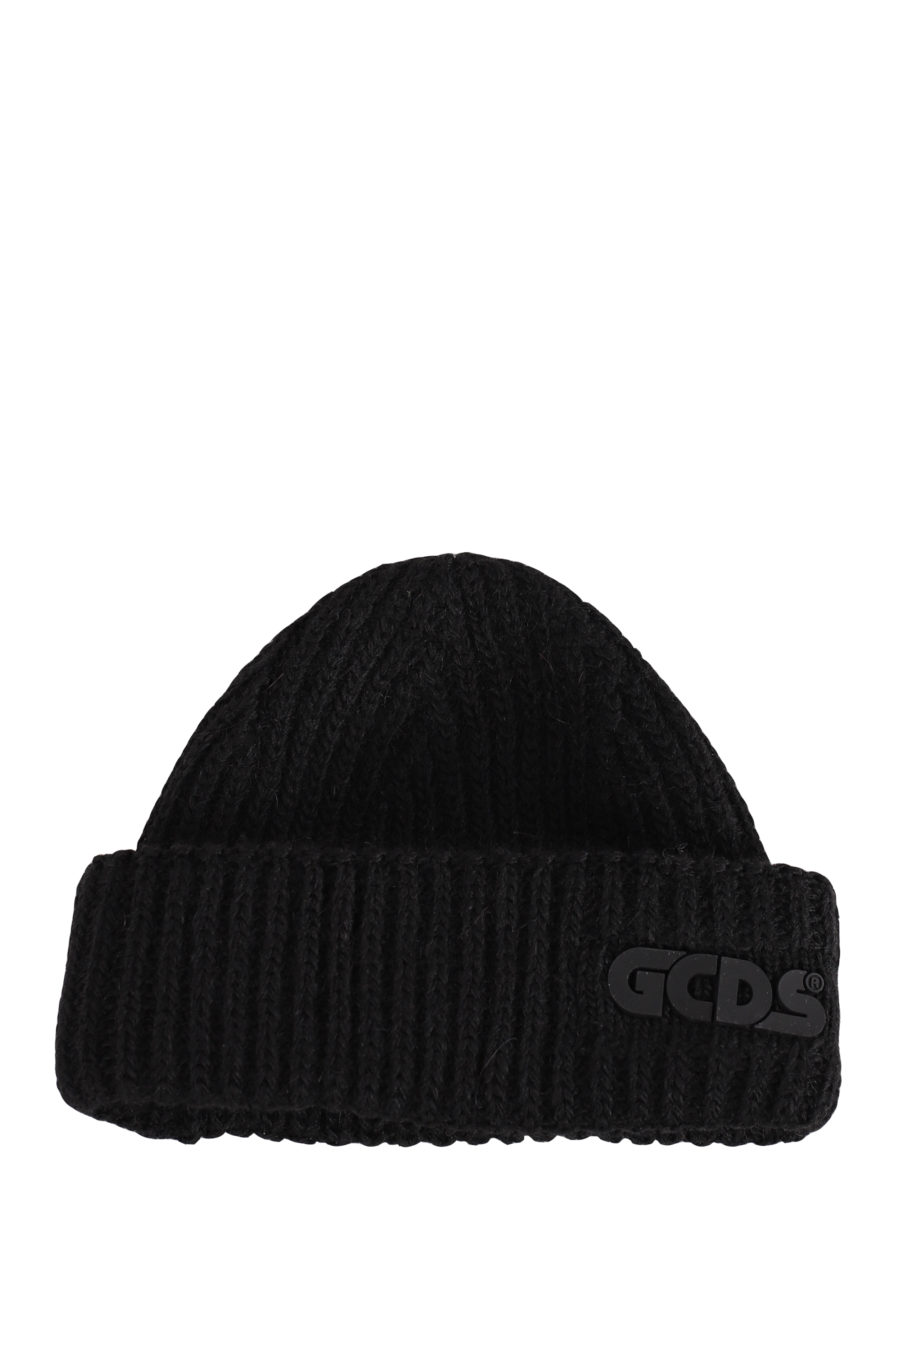 Black cap with logo - IMG 0422